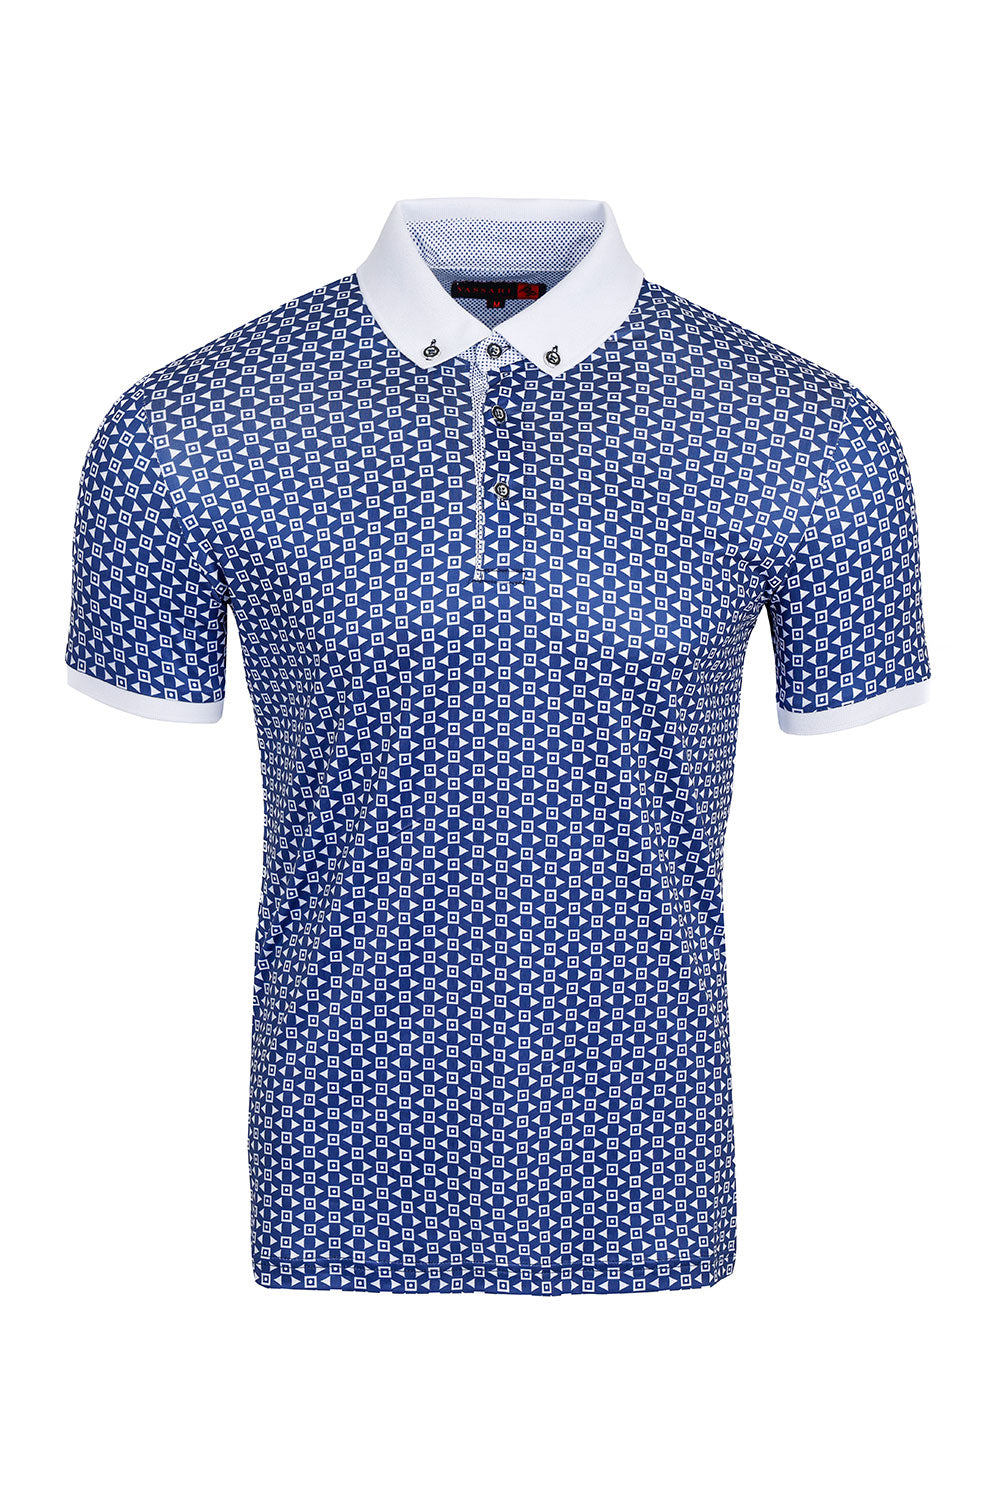 Vassari Men's Diamond Pattern Button-Down Collar Polo Shirts  3VR618 Blue